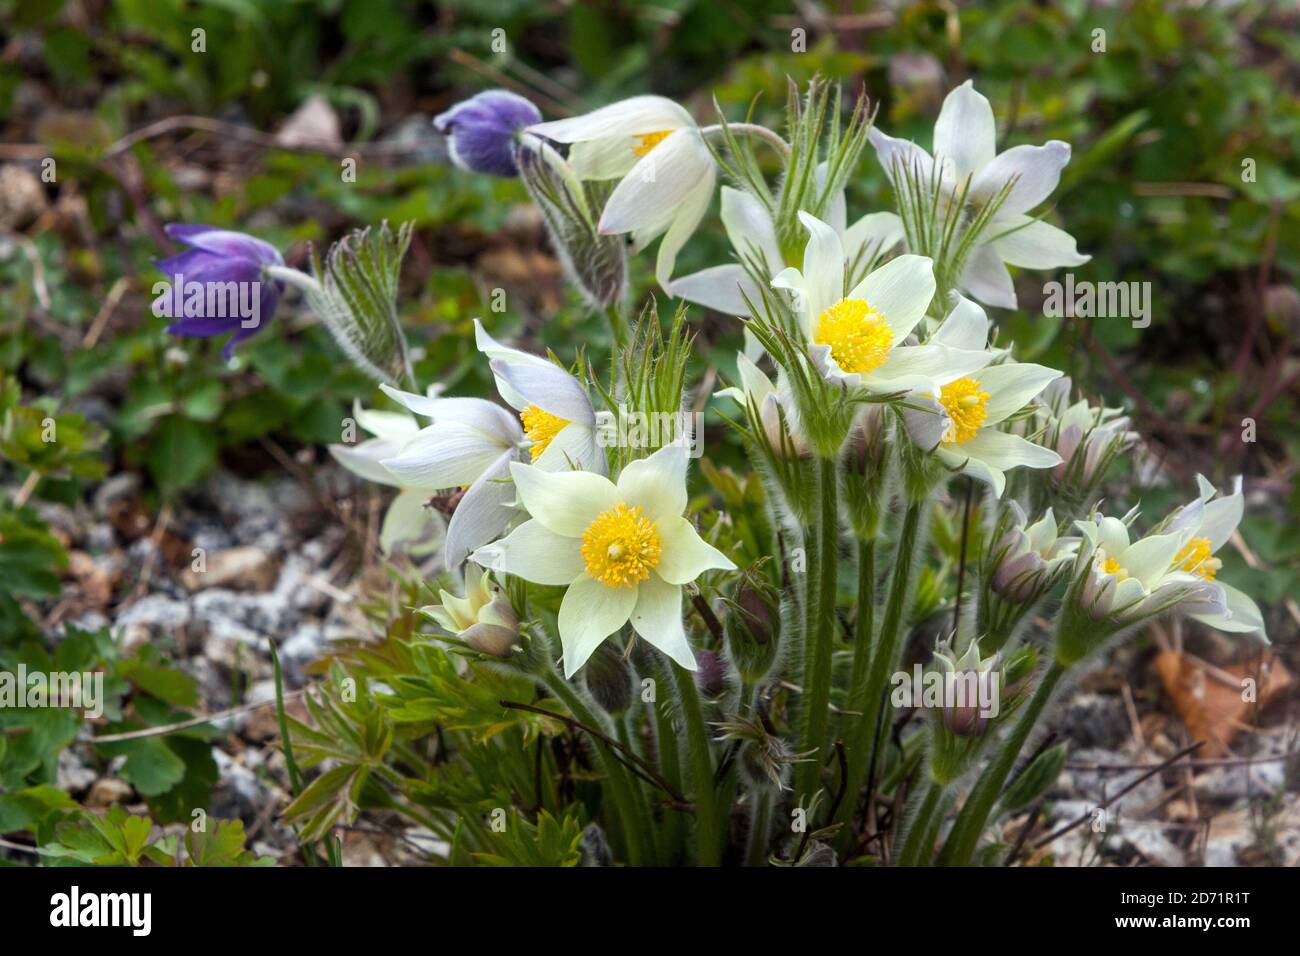 Early spring flowers Clump of White Pasque flower Pulsatilla vulgaris Alba Stock Photo